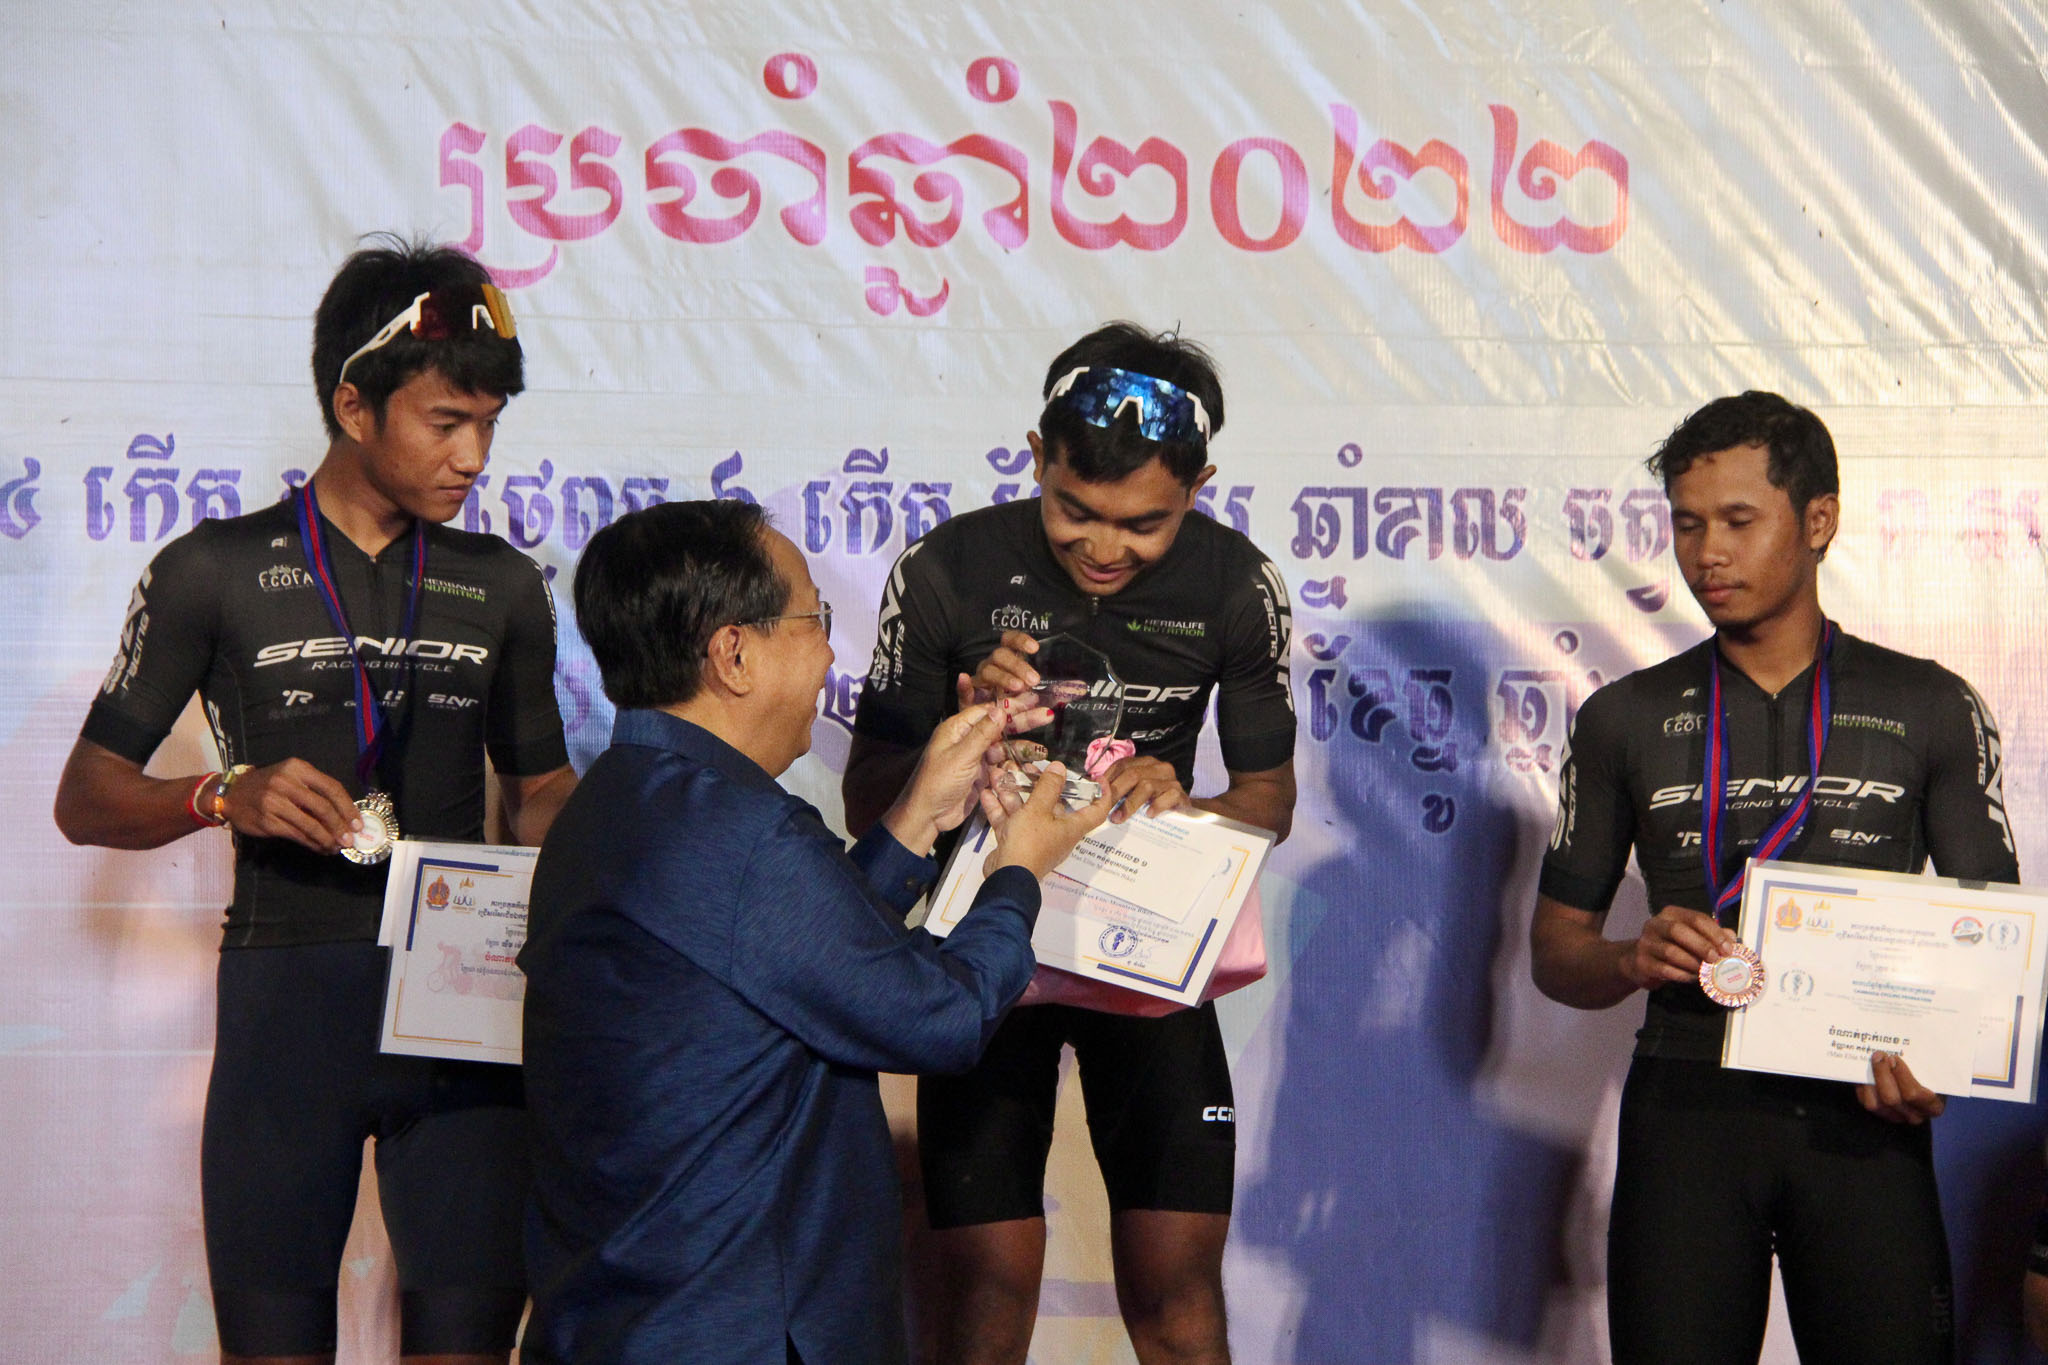 Image Courtesy: Cambodian Cycling Federation